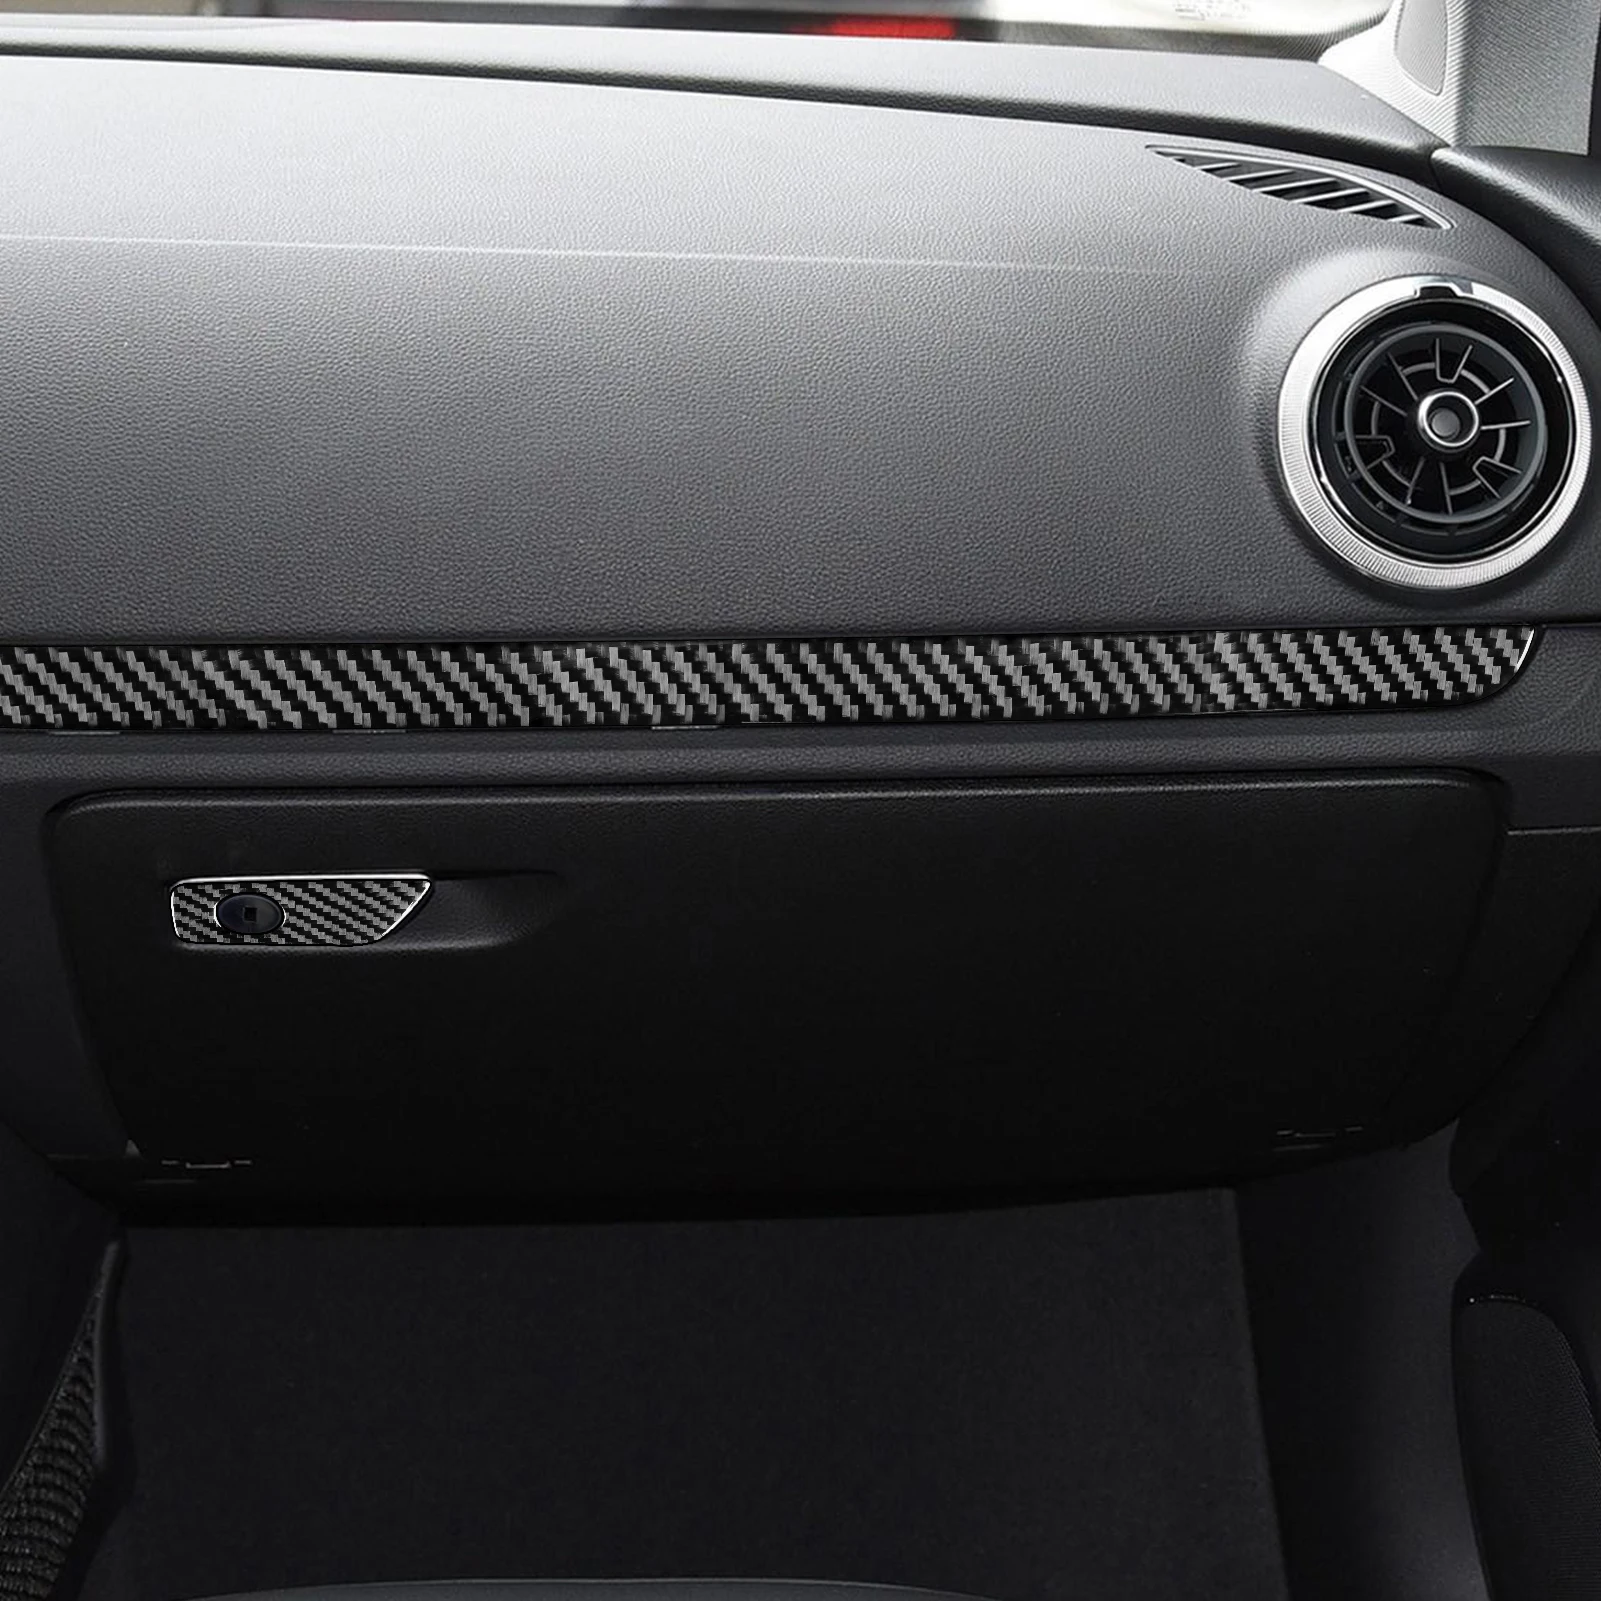 For Audi A3 S3 RS3 8V 2013-2019 Real Carbon Fiber Car Interior Decal Auto  Co-pilot Glove Box Panel Cover Trim Sticker Strip 2Pcs - AliExpress